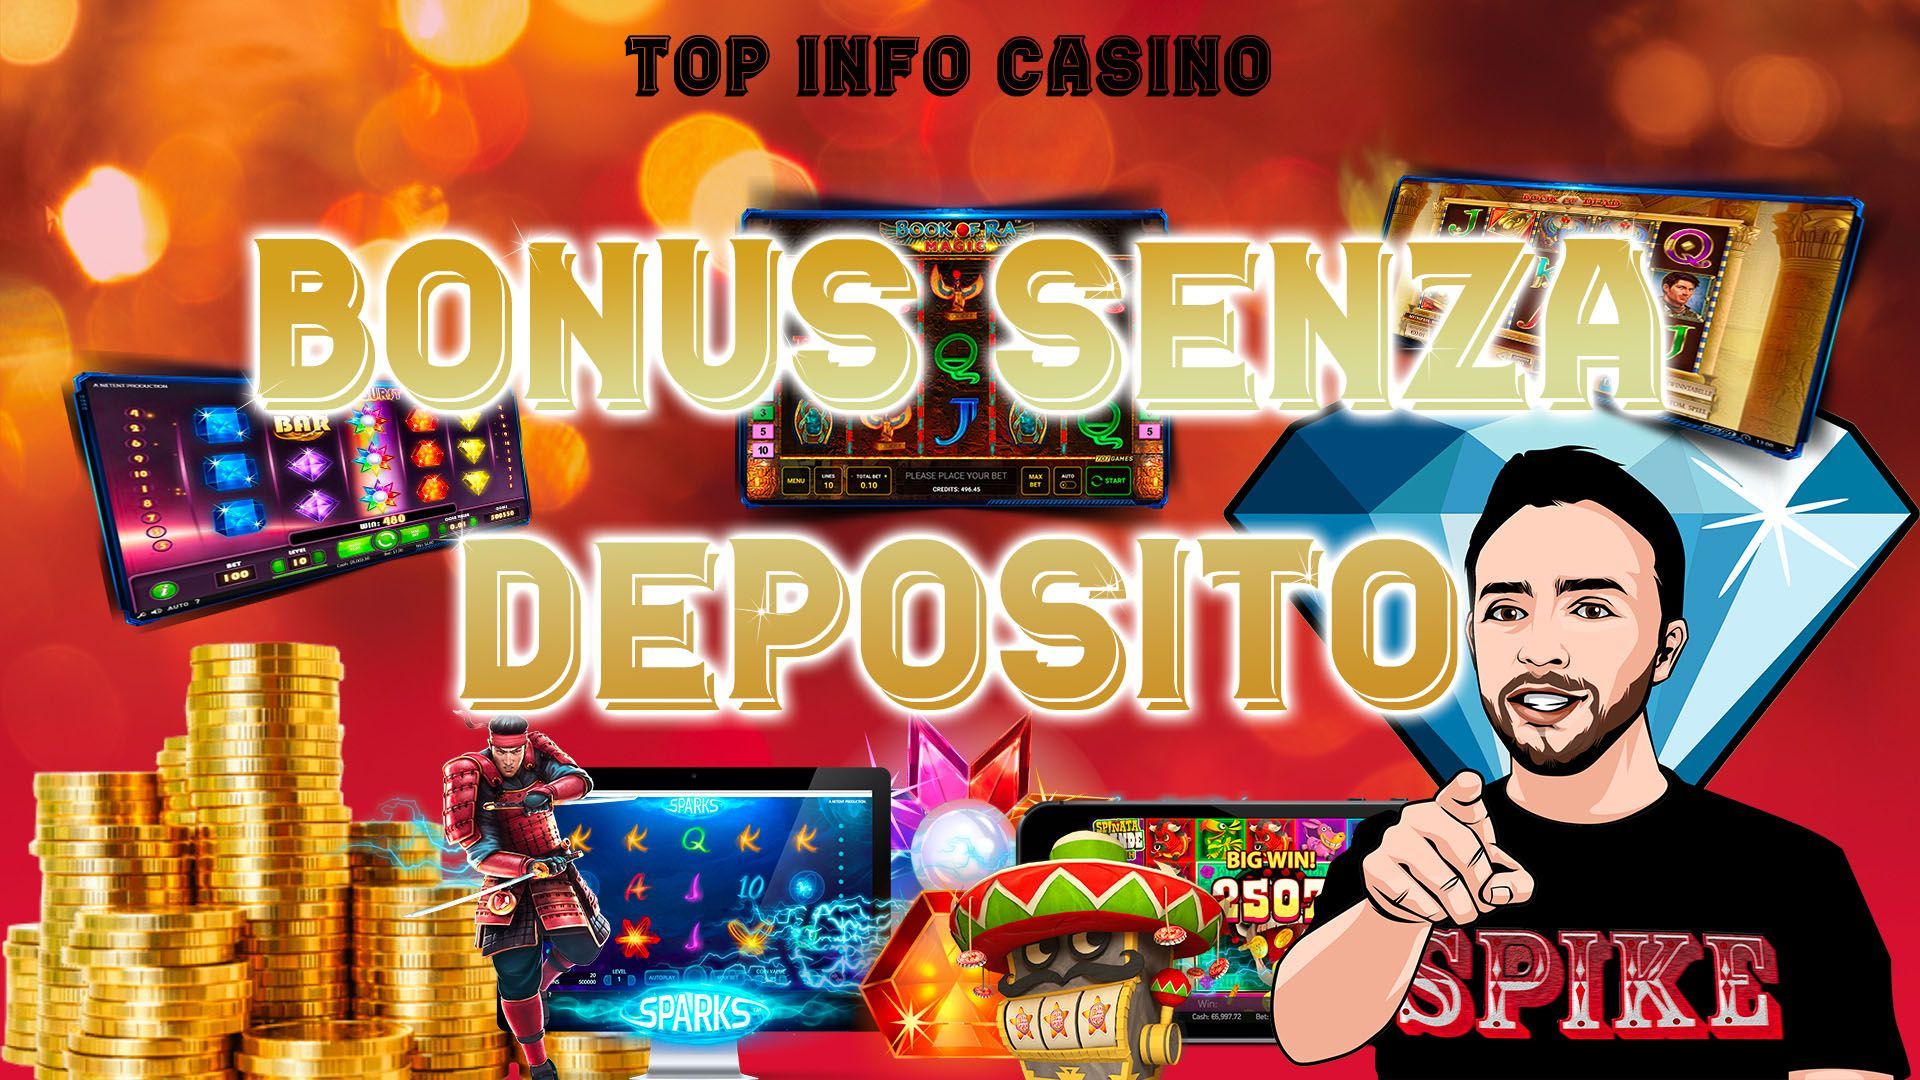 Sugarhouse casino online blackjack